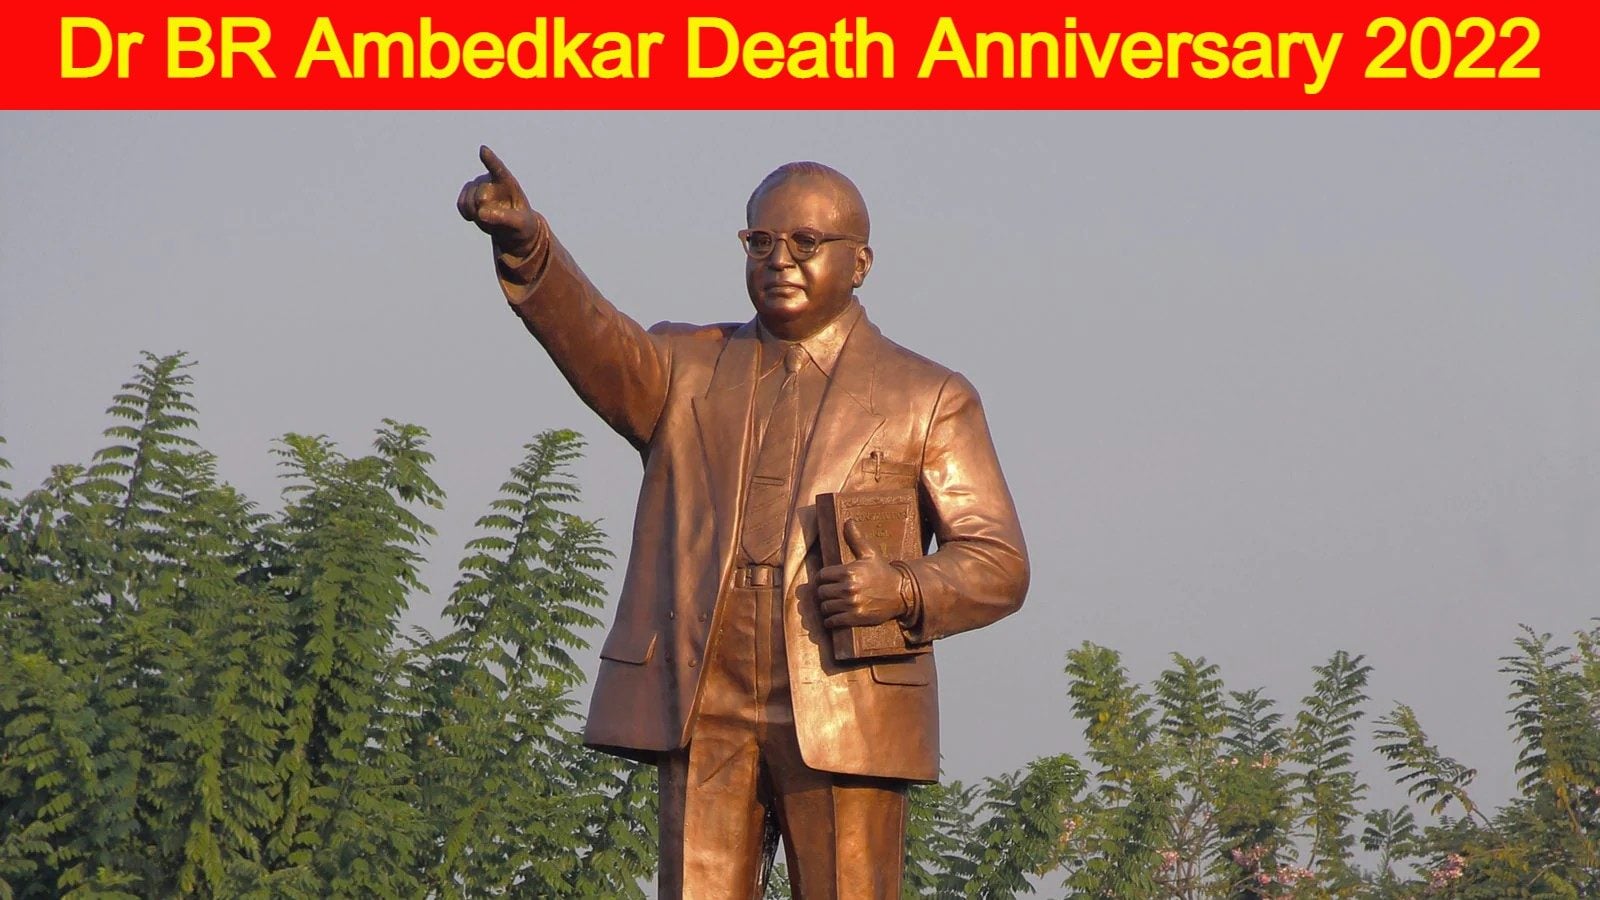 speech on ambedkar death anniversary